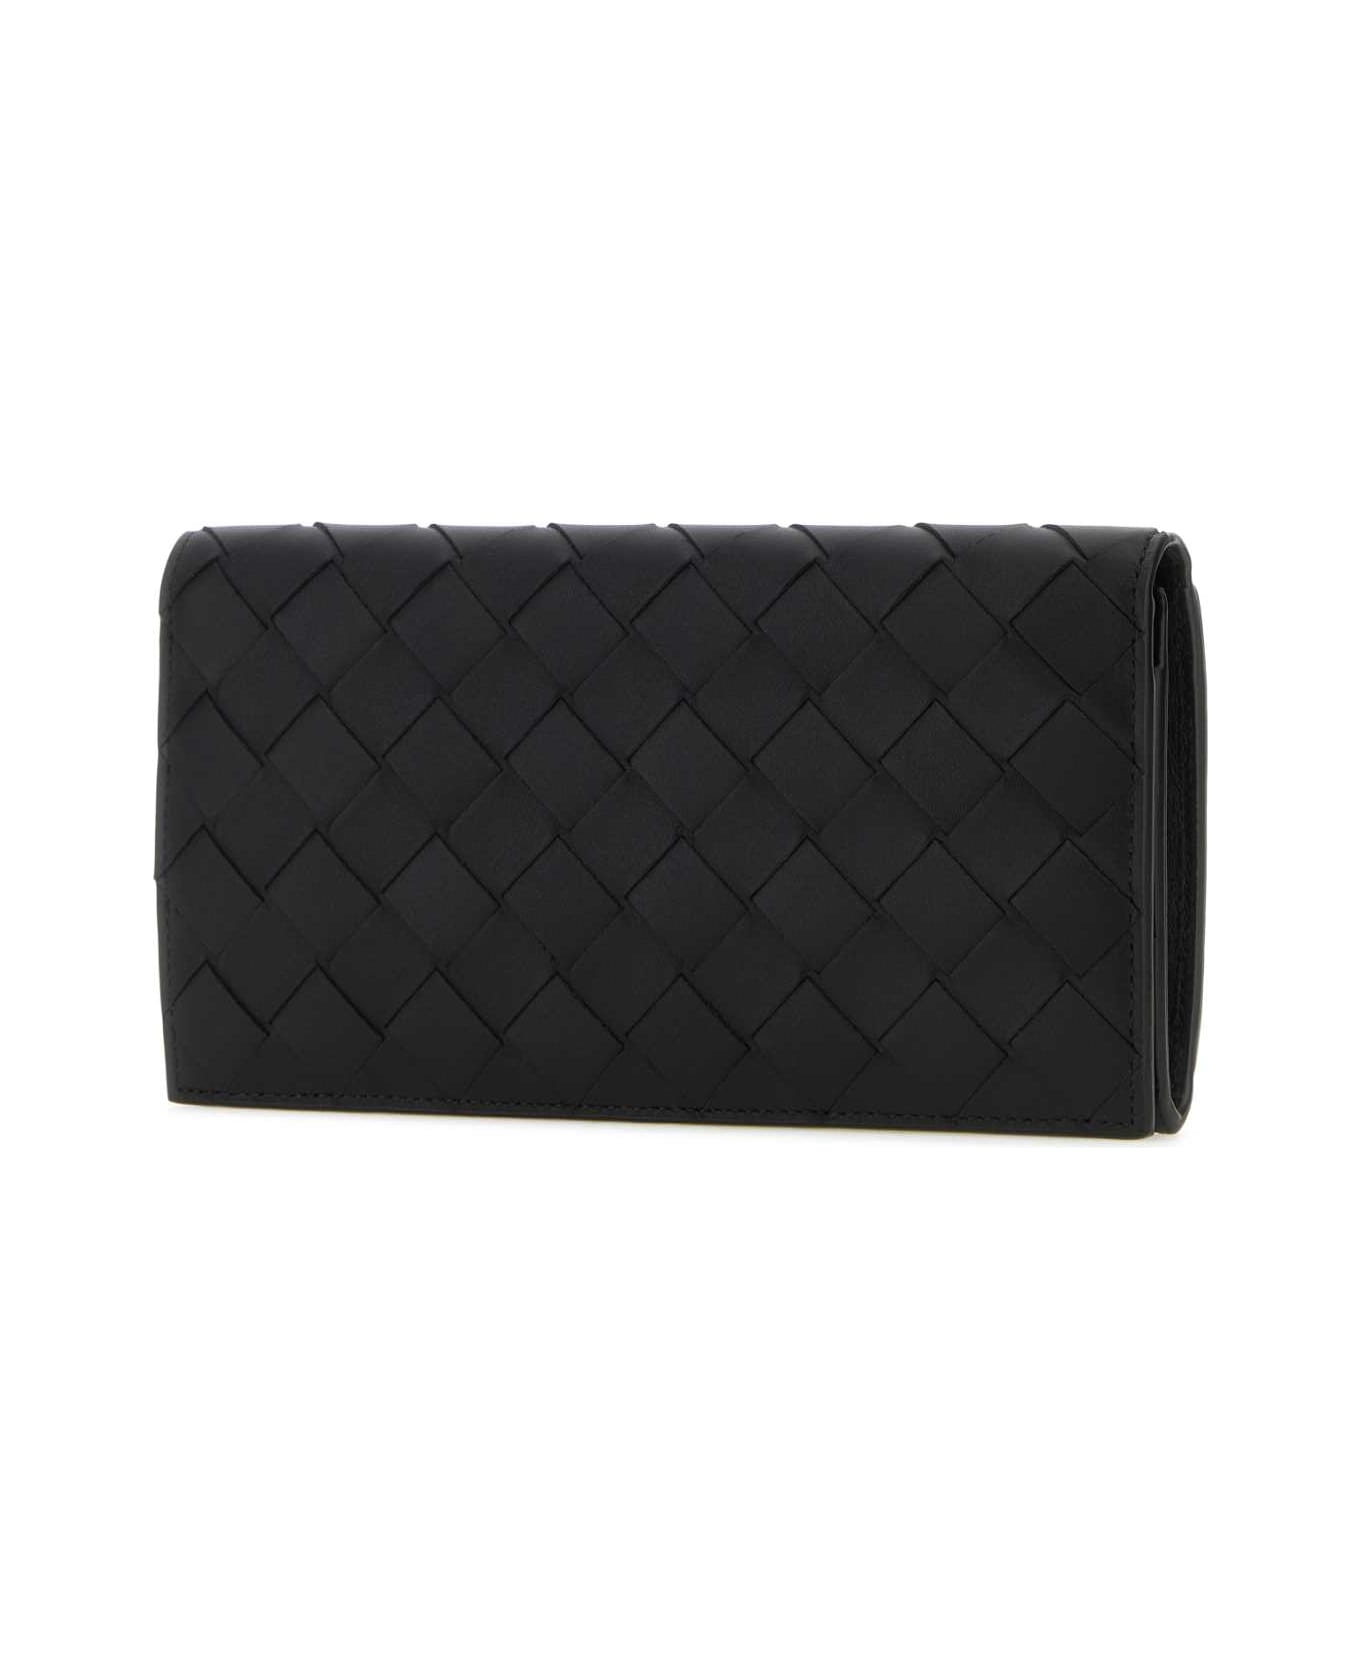 Bottega Veneta Black Leather Wallet - BLK